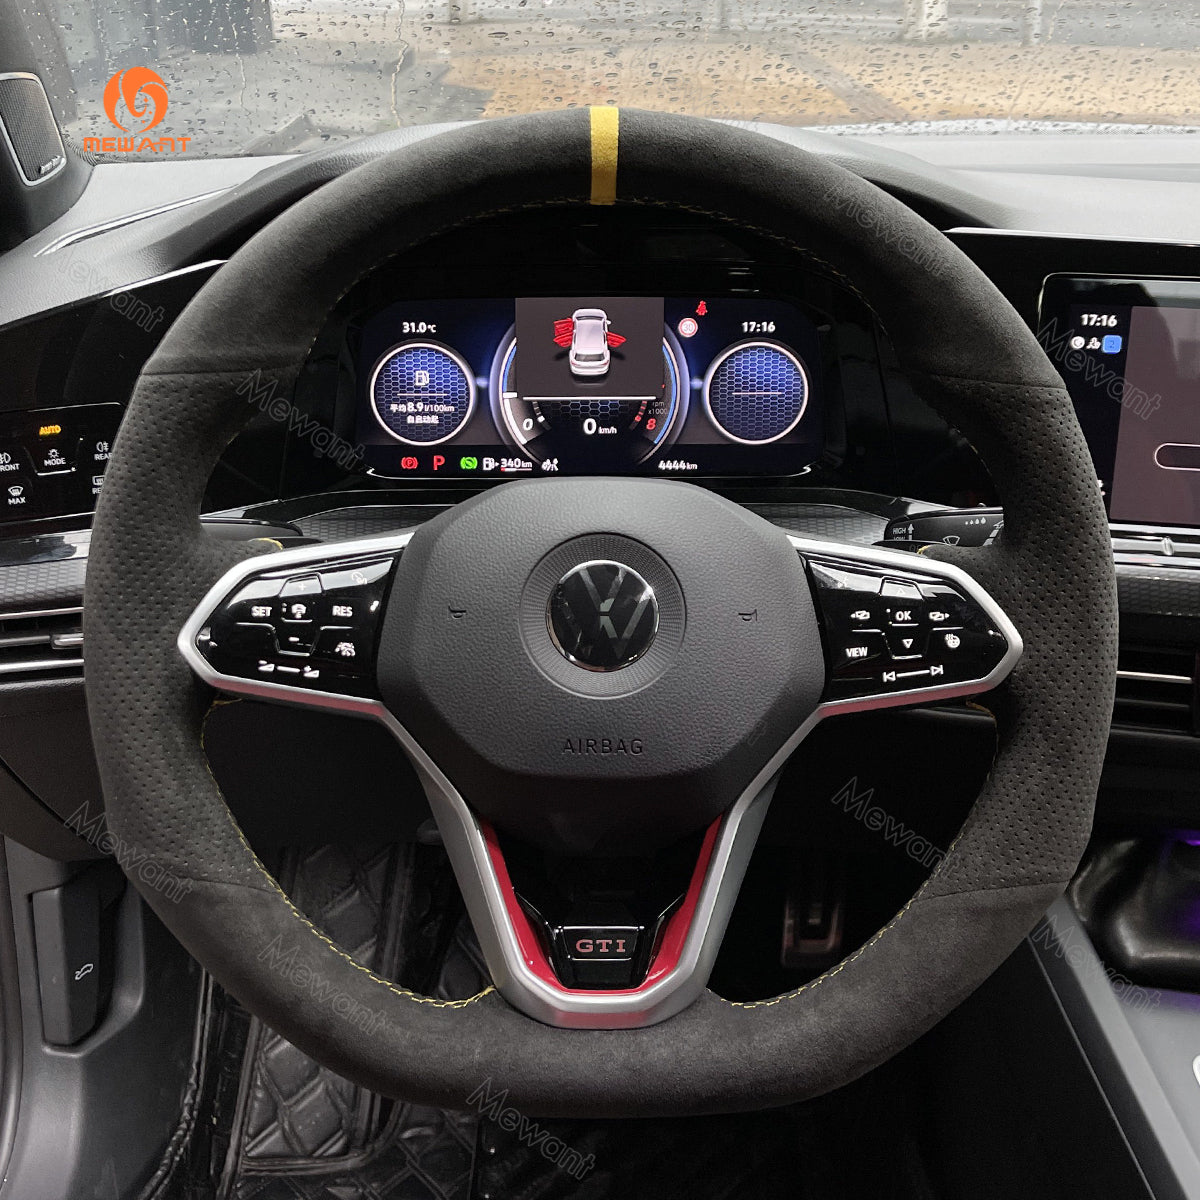 MEWANT Black Leather Suede Carbon Fiber Car Steering Wheel Cover for Volkswagen VW Golf 8 (R-Line) Arteon Tiguan (R-Line) Touareg (R-Line)